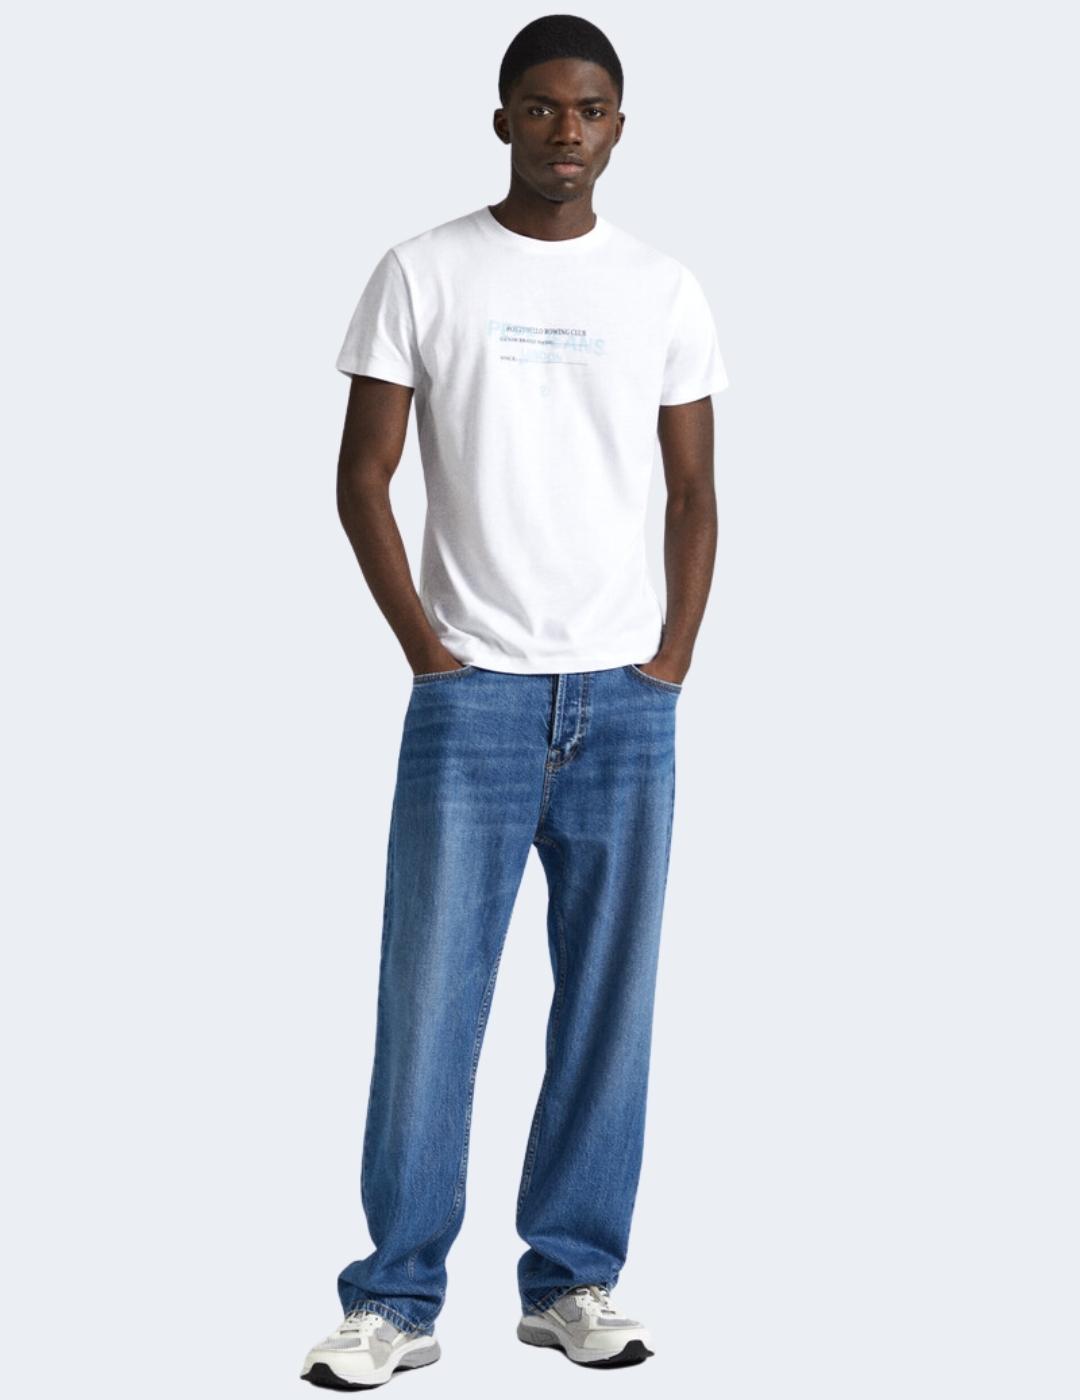 Camiseta Pepe Jeans Hombre Blanca Cinthom